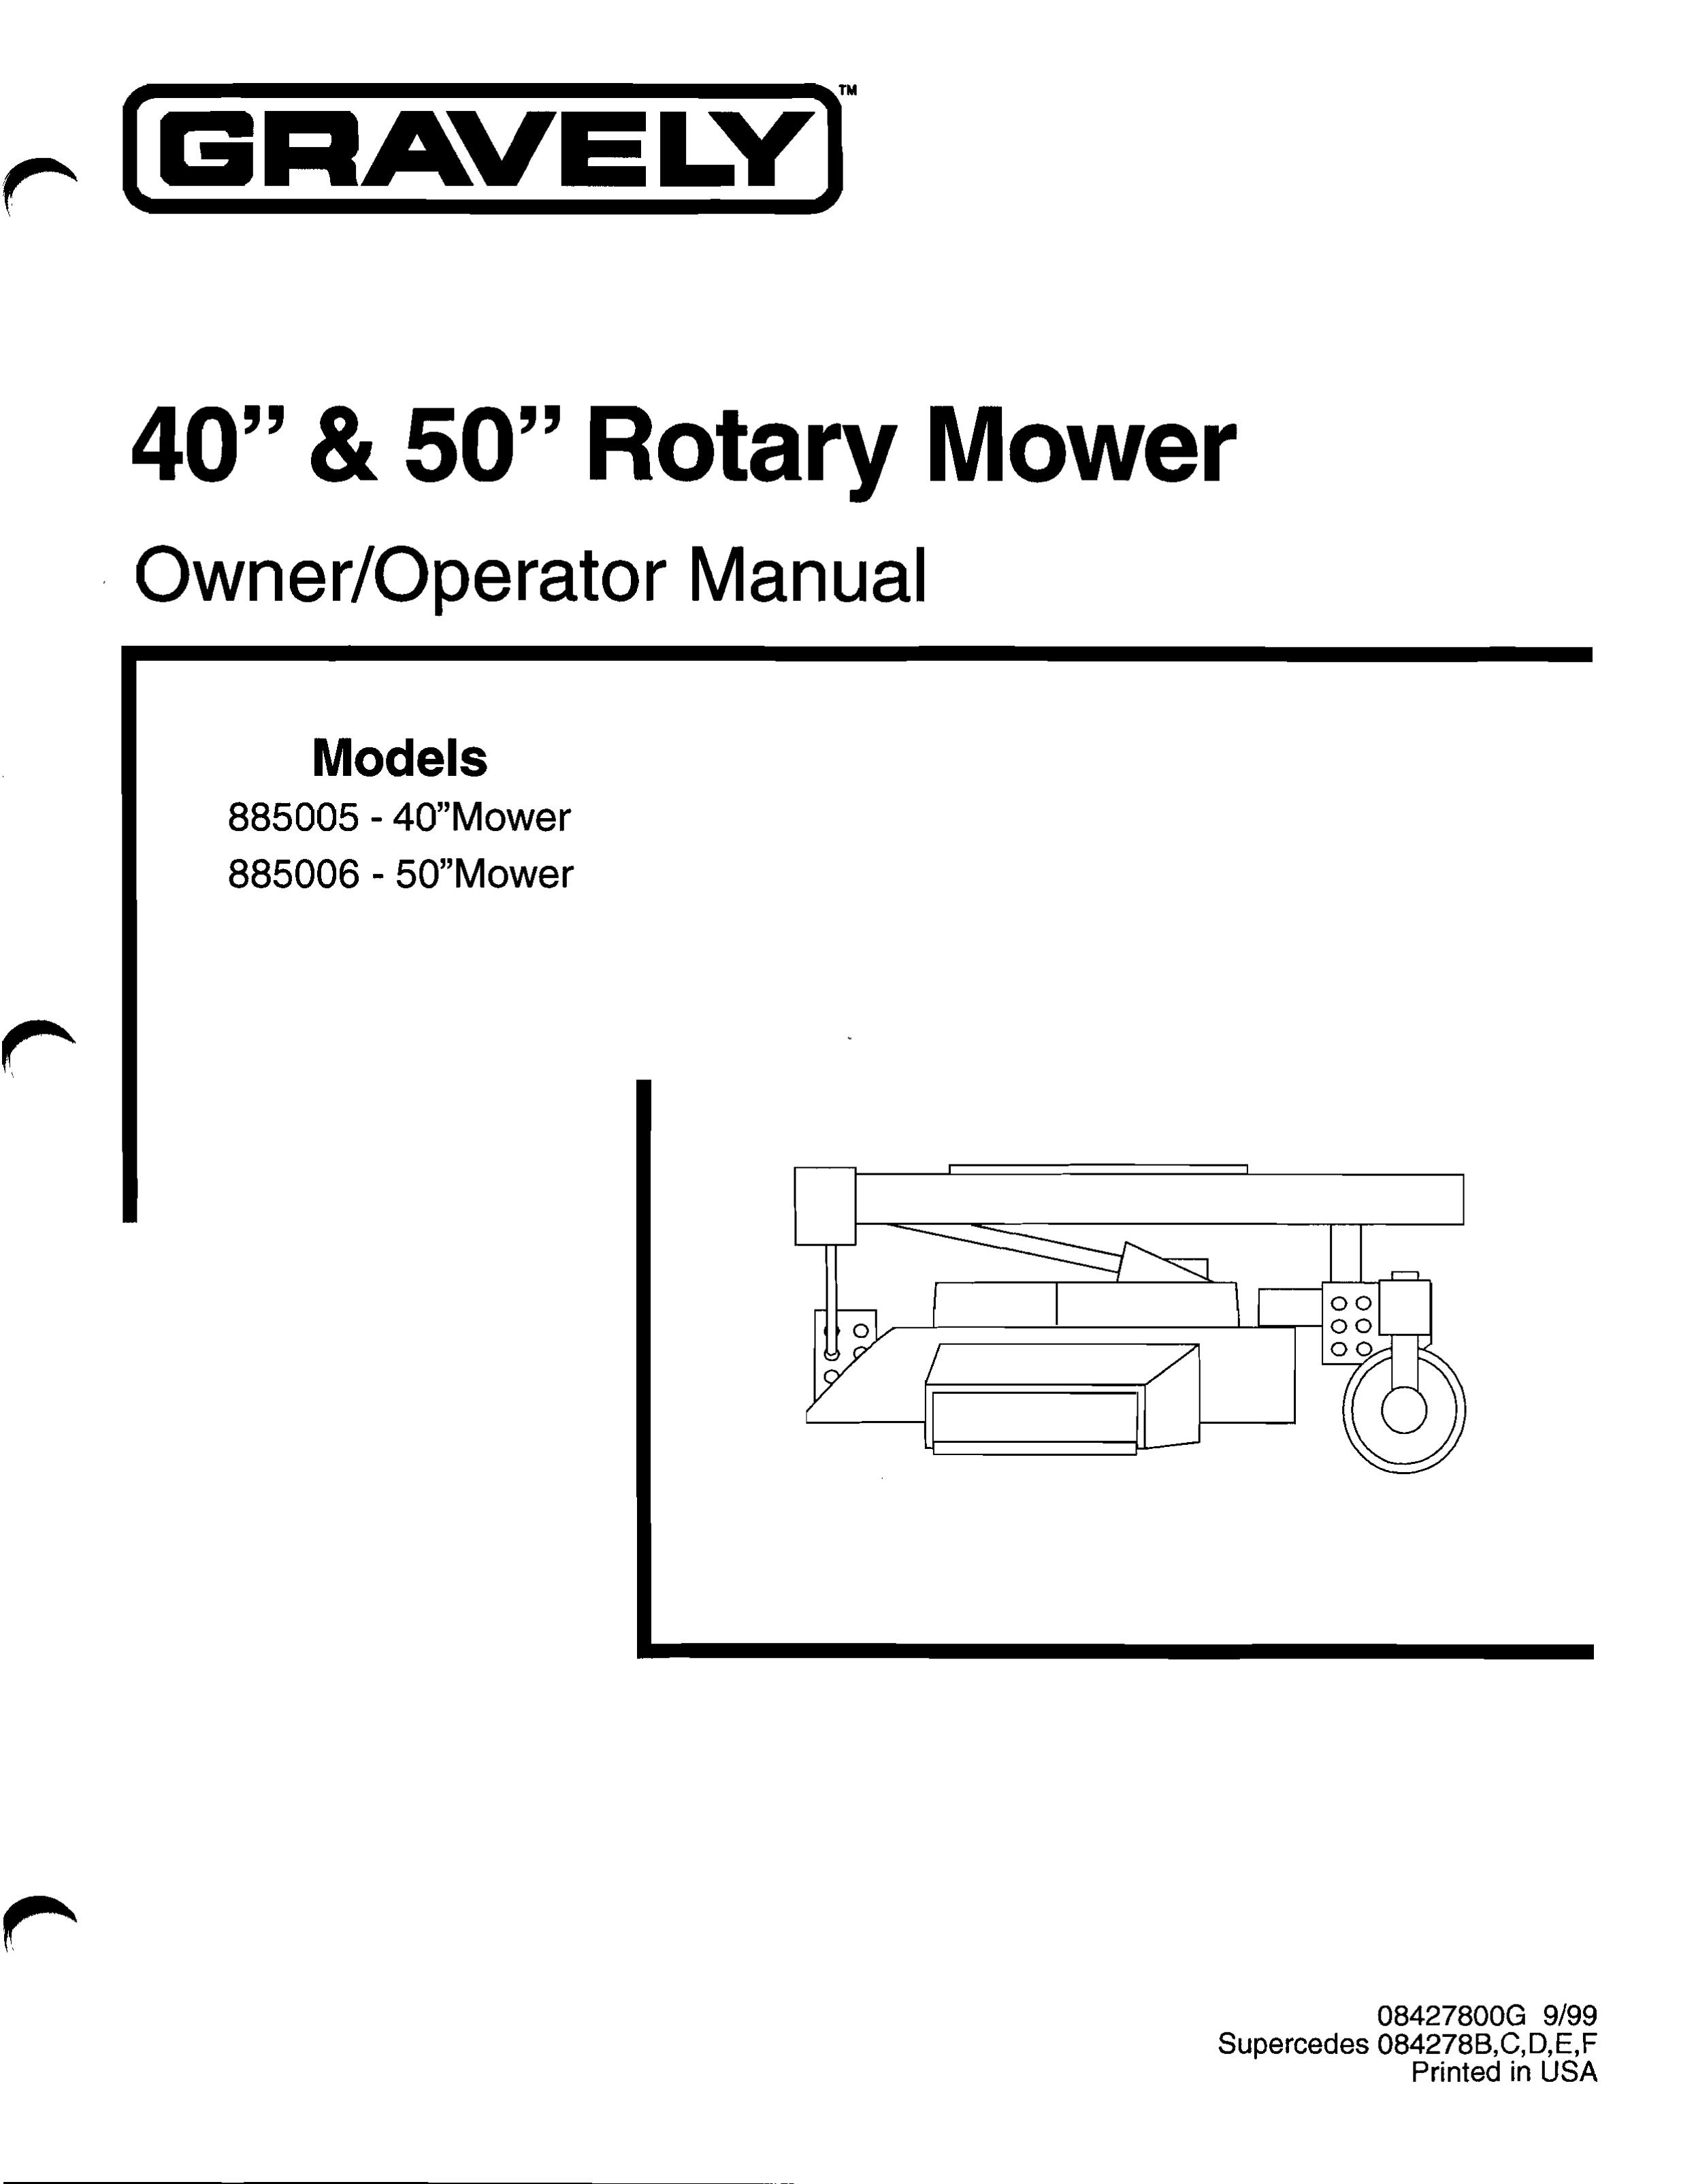 Gravely 885006 Lawn Mower User Manual